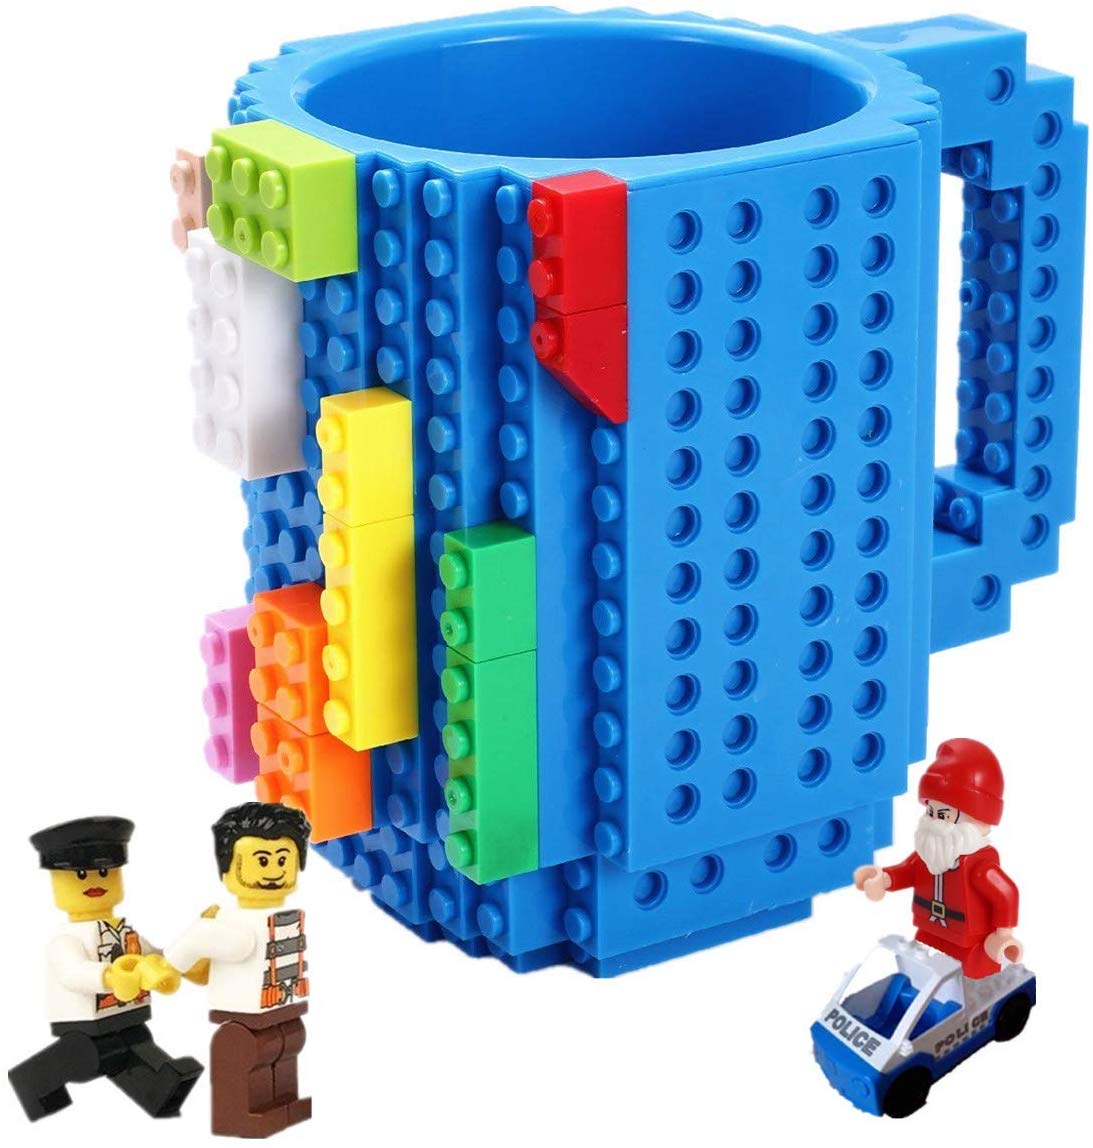 Majroe mærkelig protektor Lego Builder Mug - Useless Things to Buy!